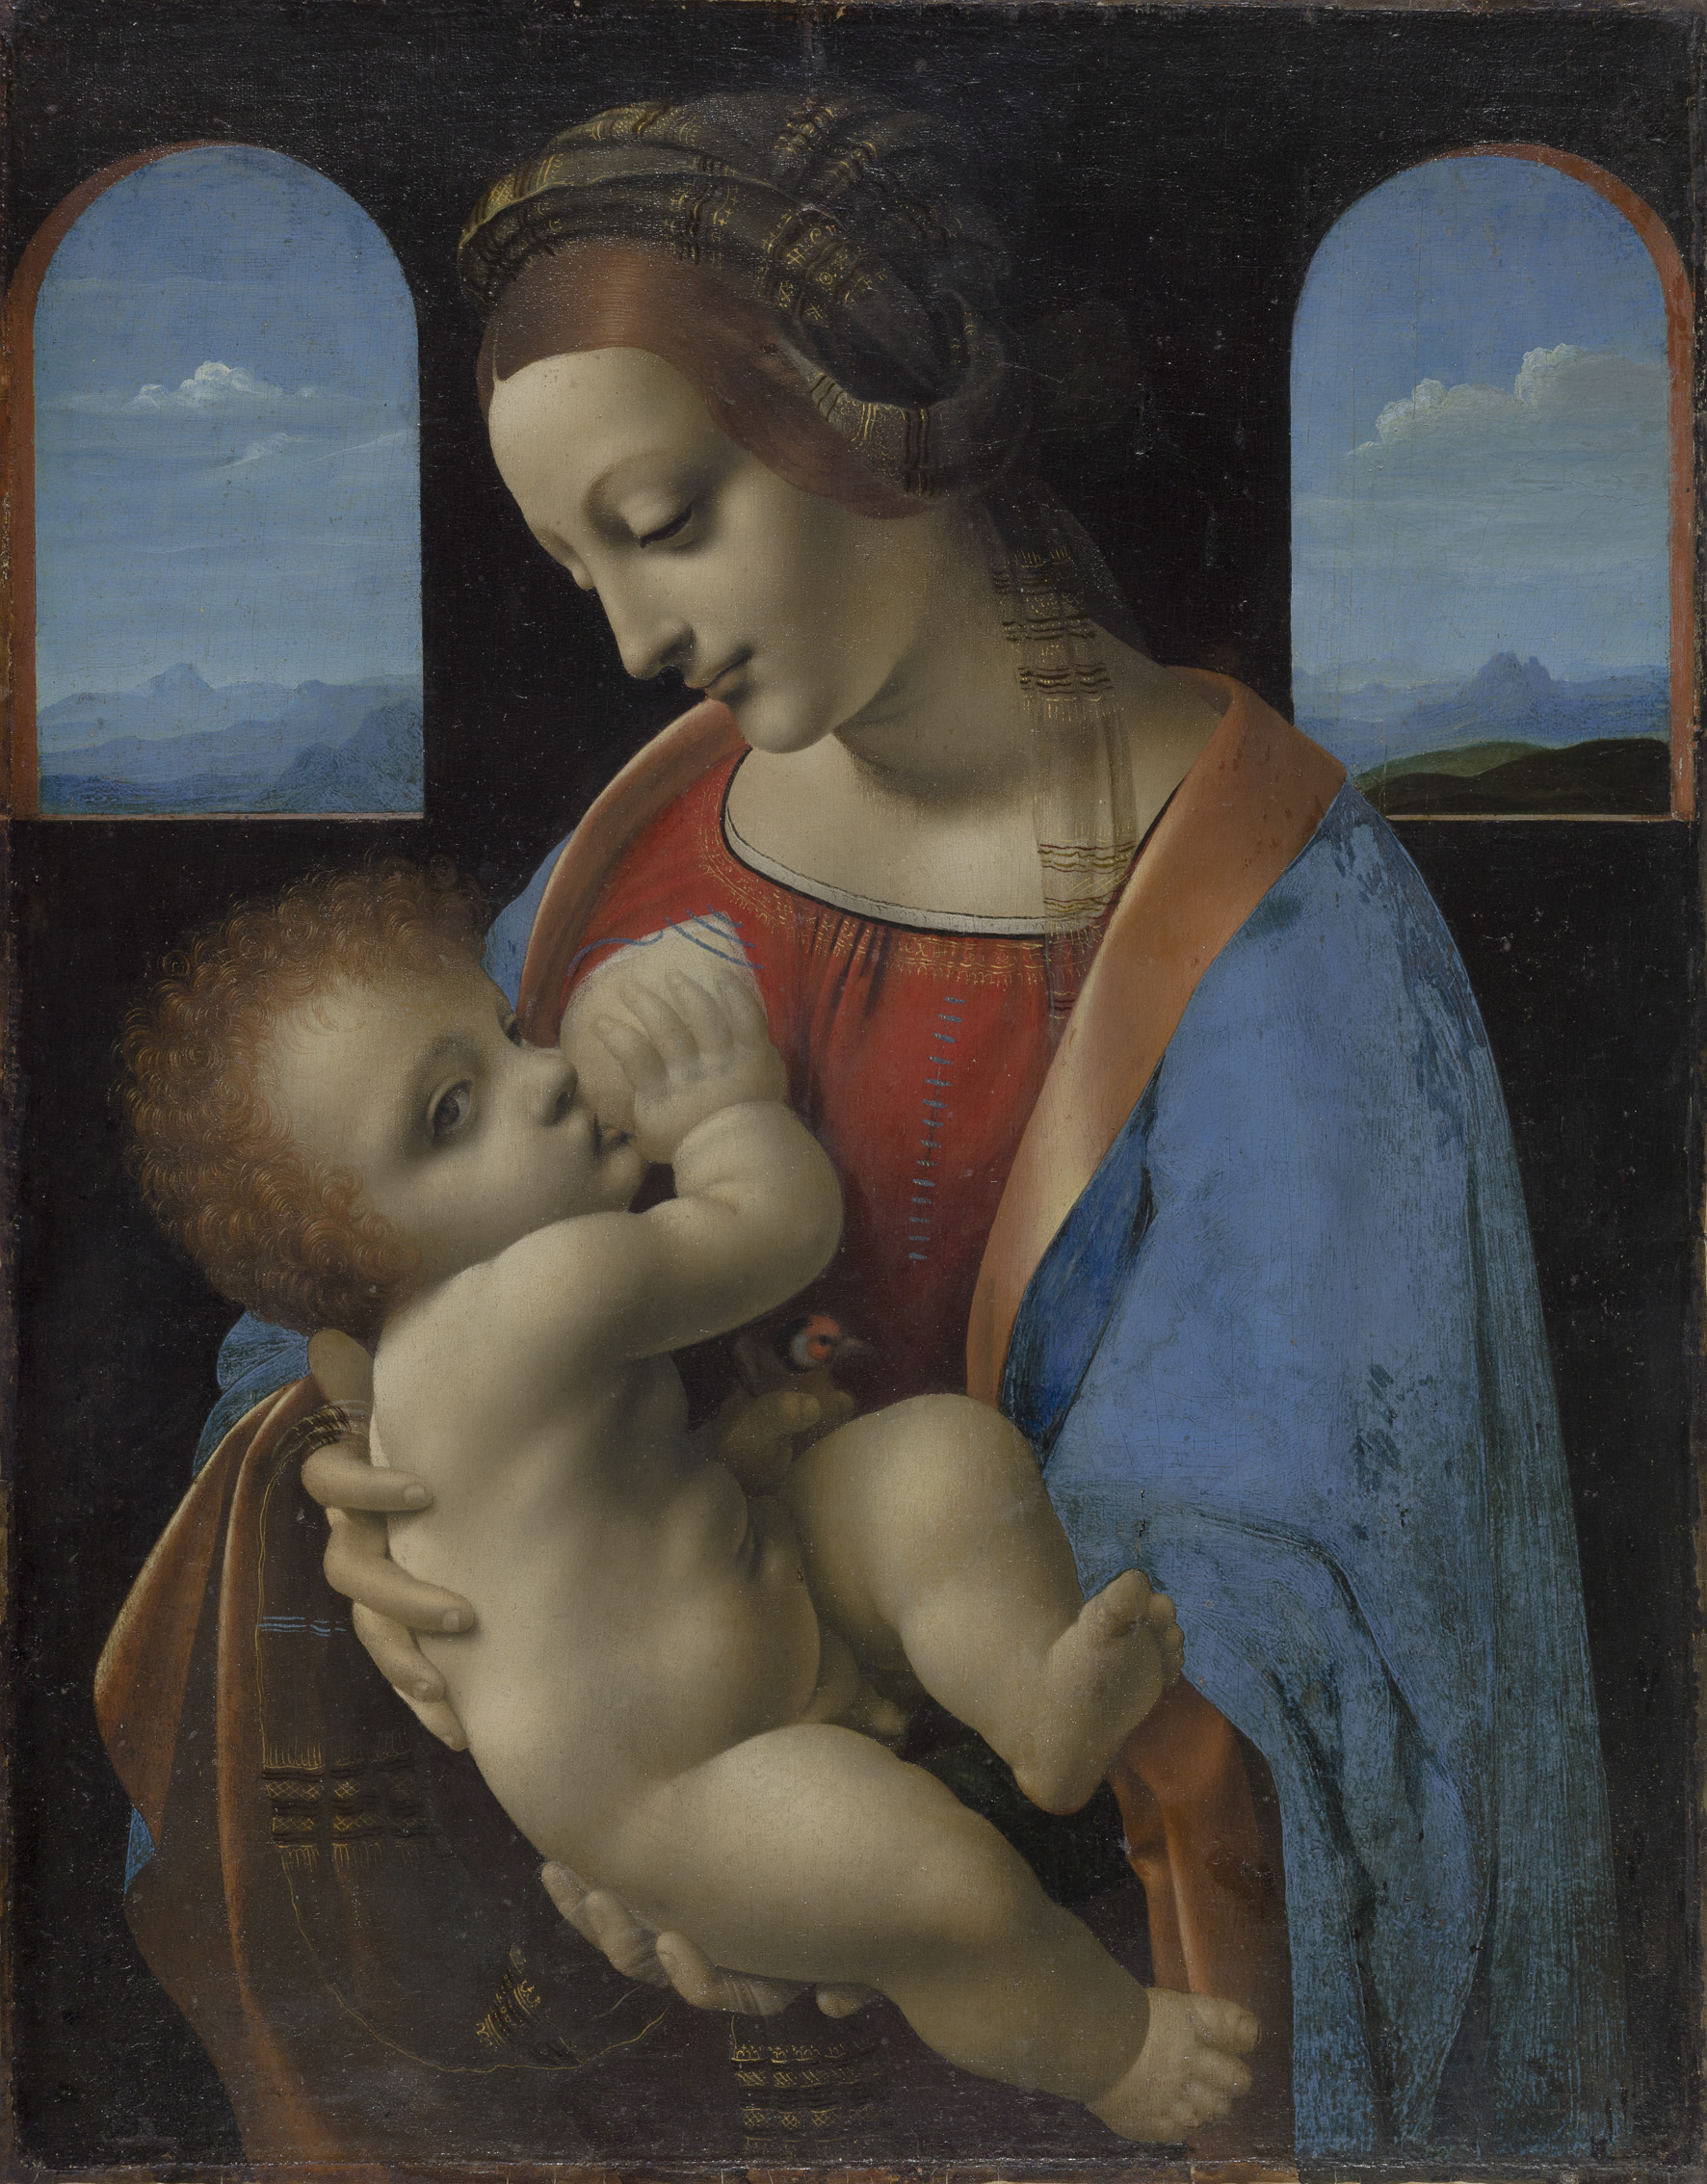 مادونا ليتا by Leonardo da Vinci - 1490م 